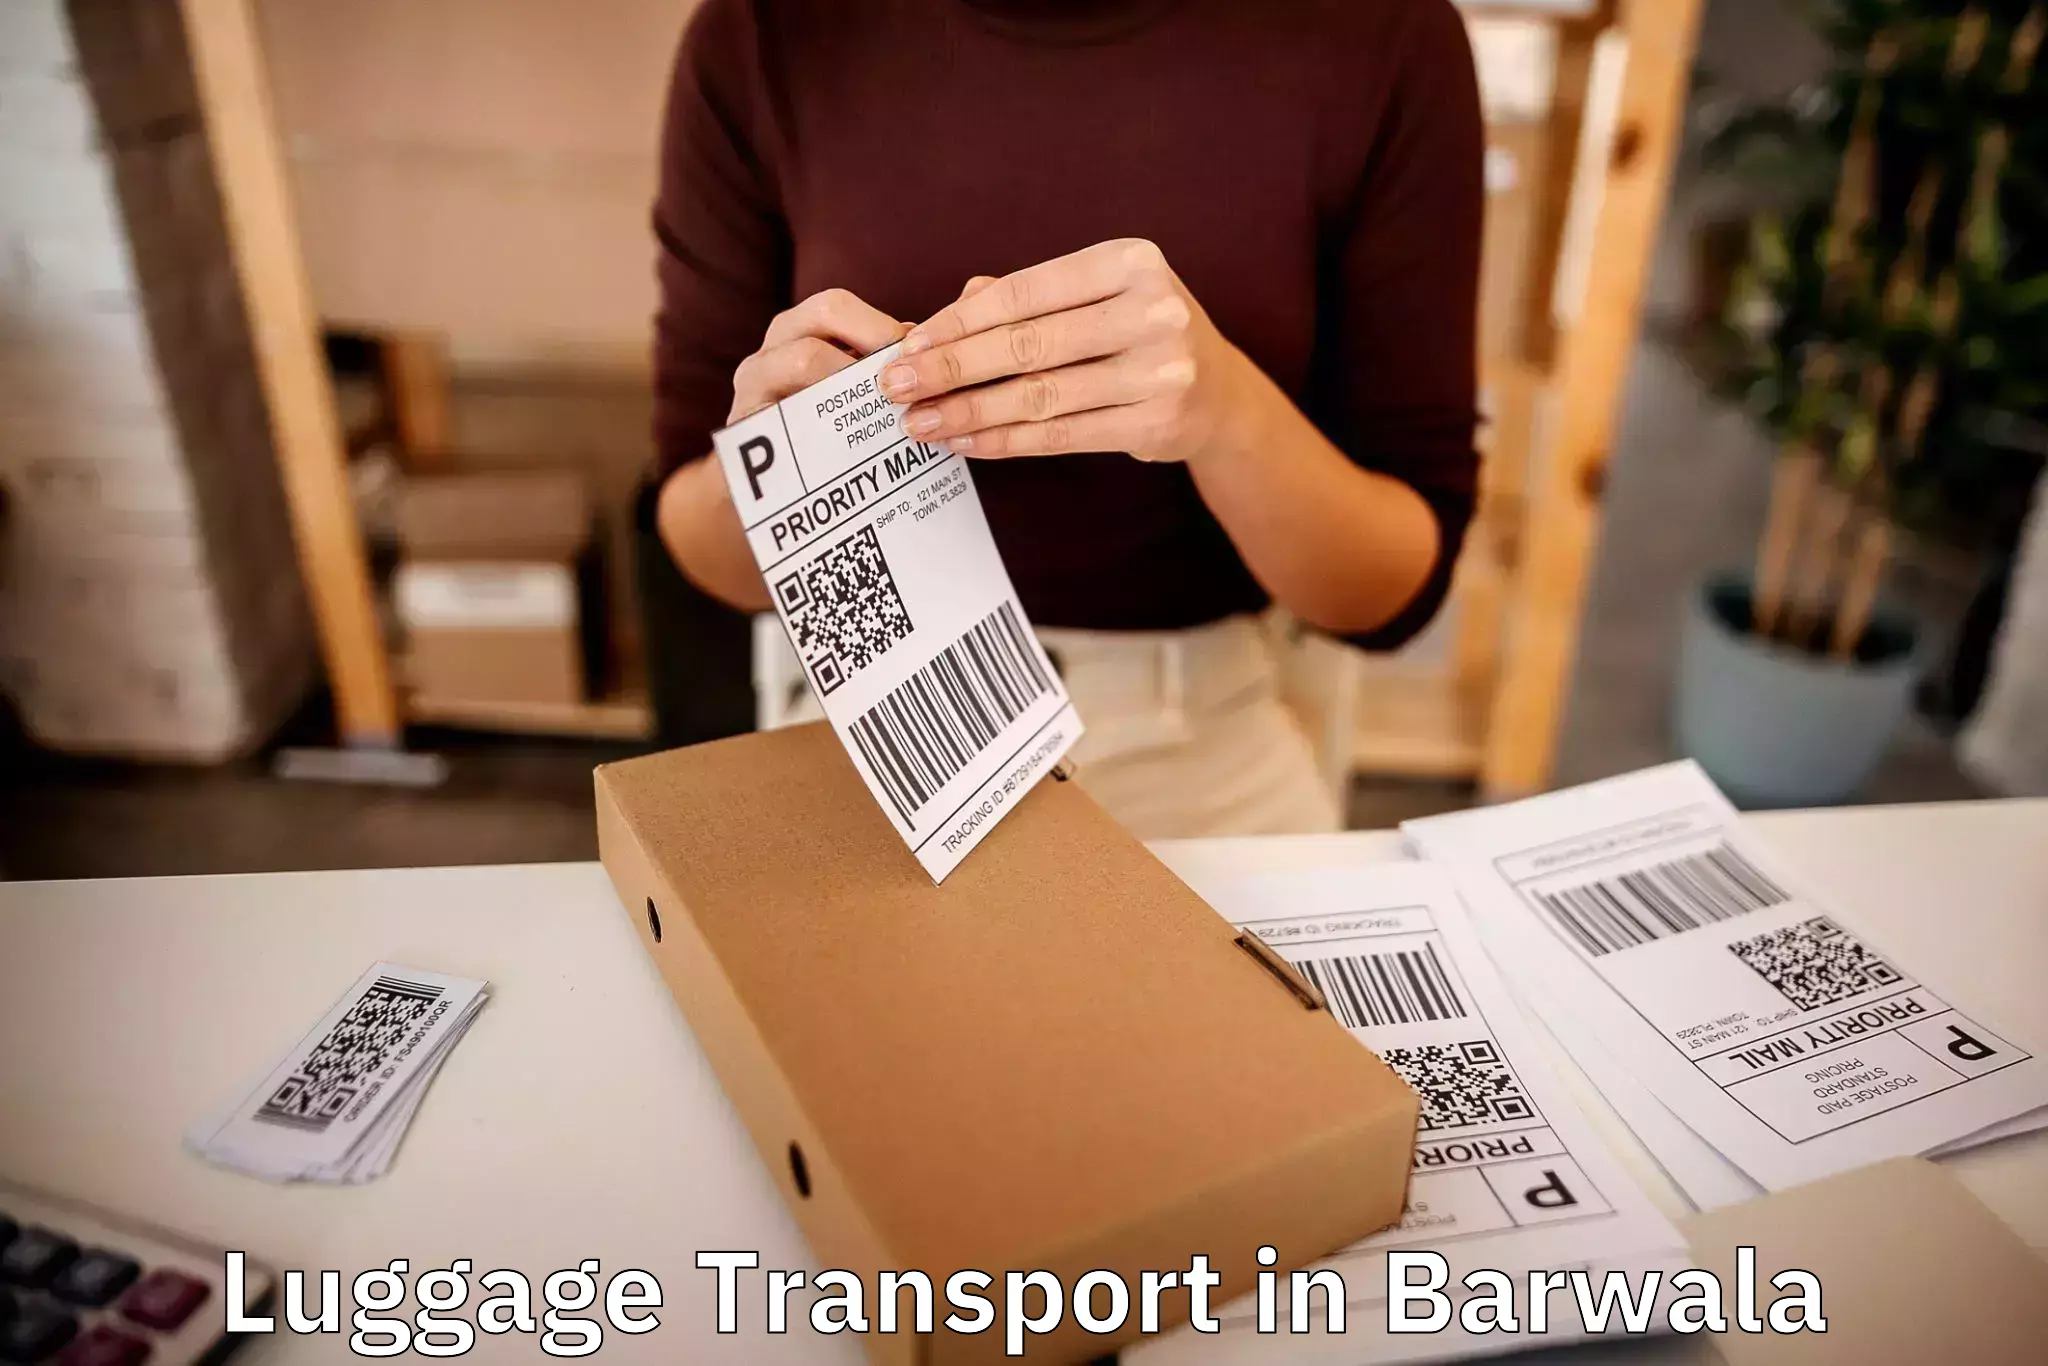 Luggage shipping consultation in Barwala